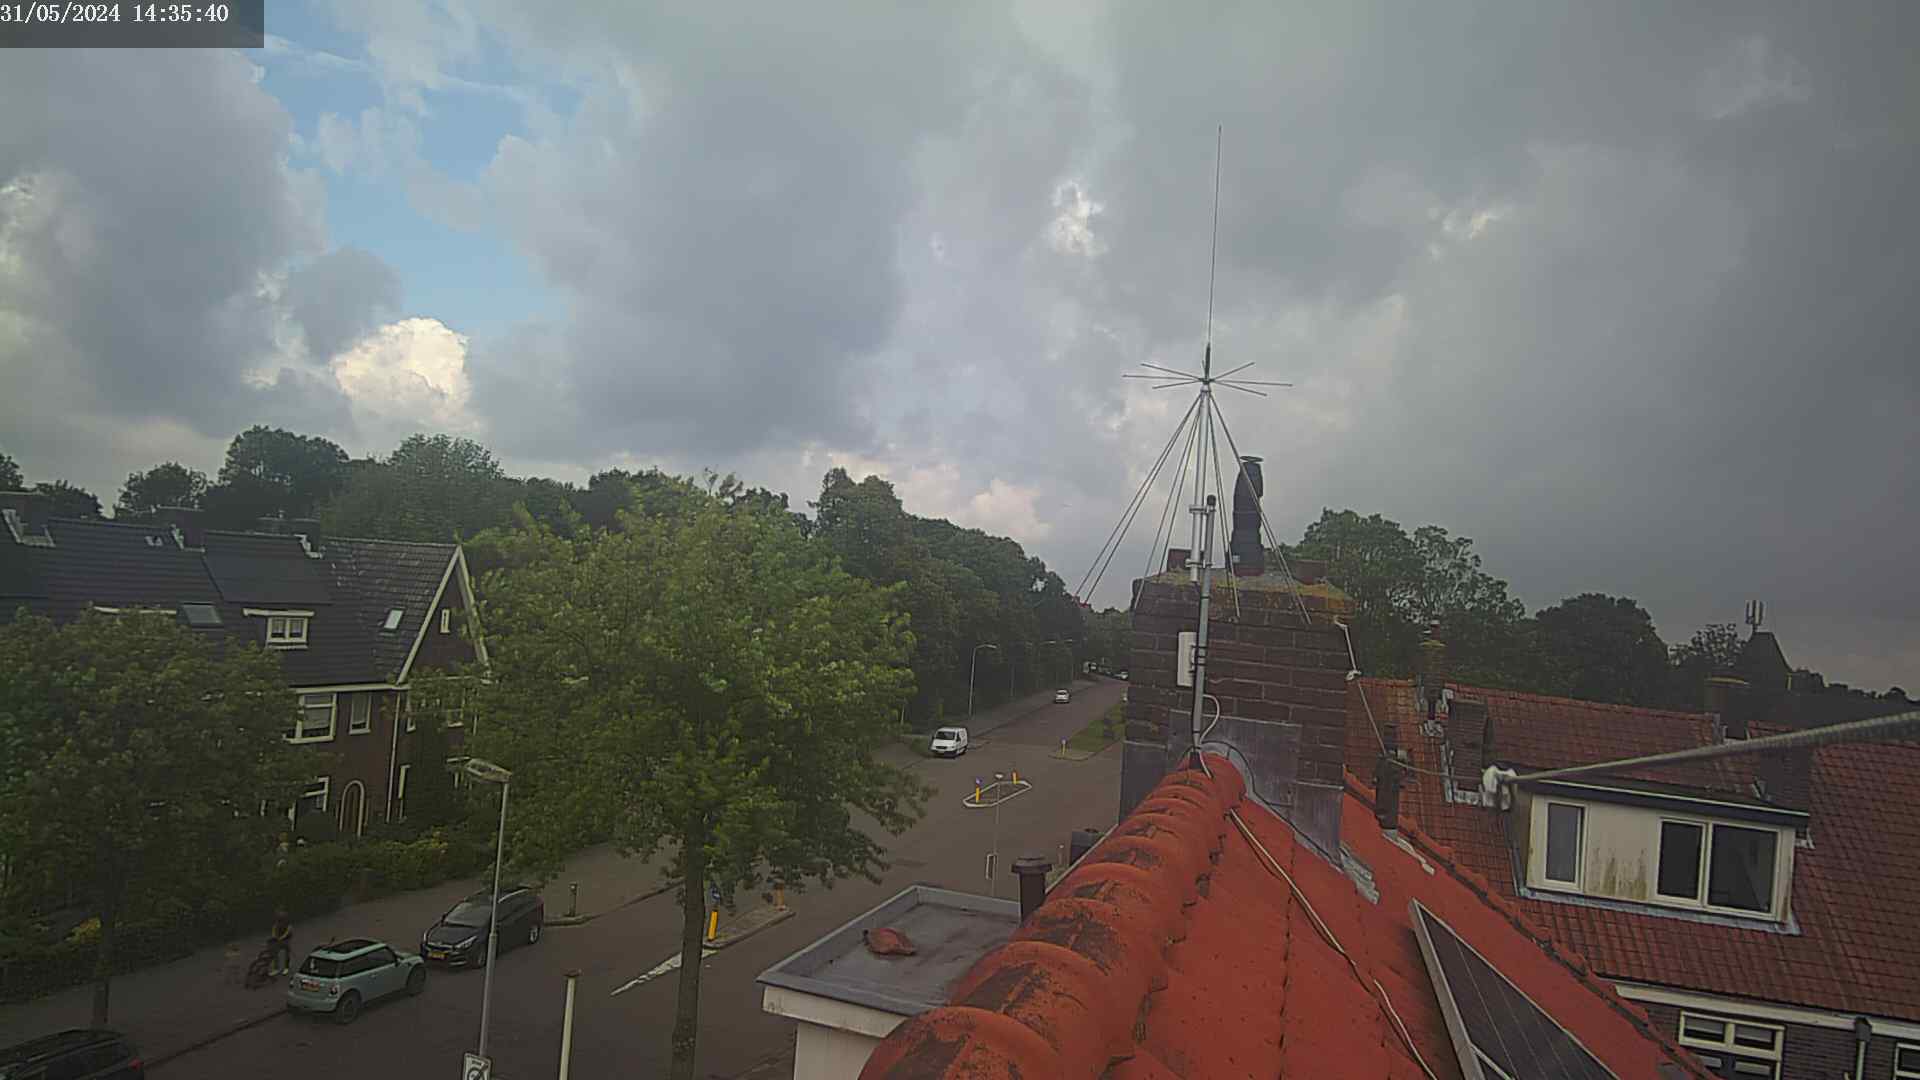 Haarlem Gio. 15:35